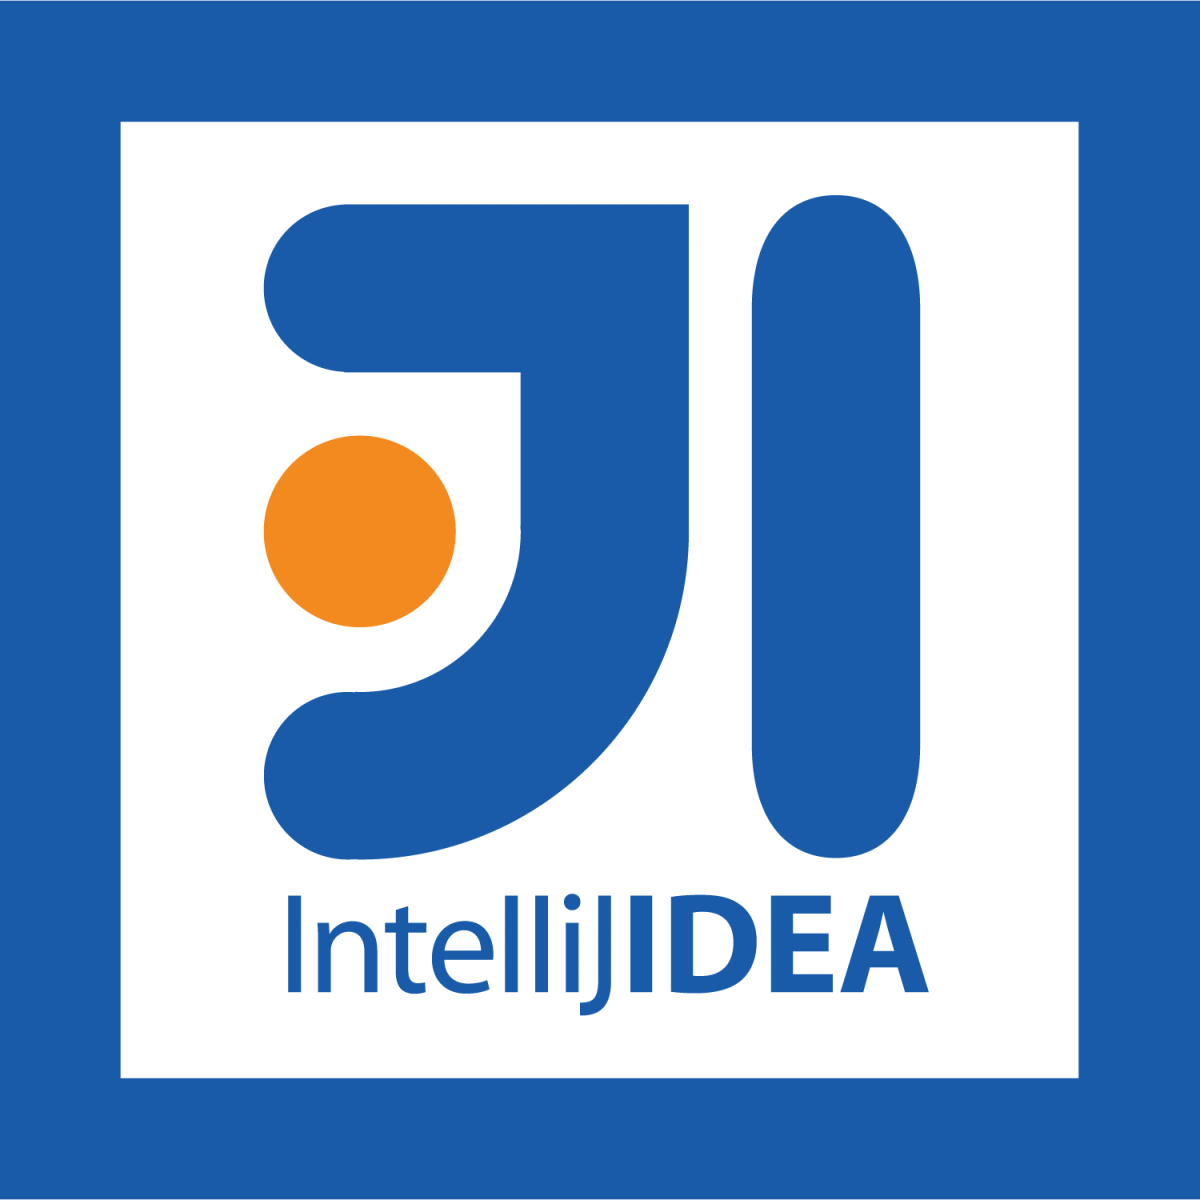 IntelliJ IDEA Crack